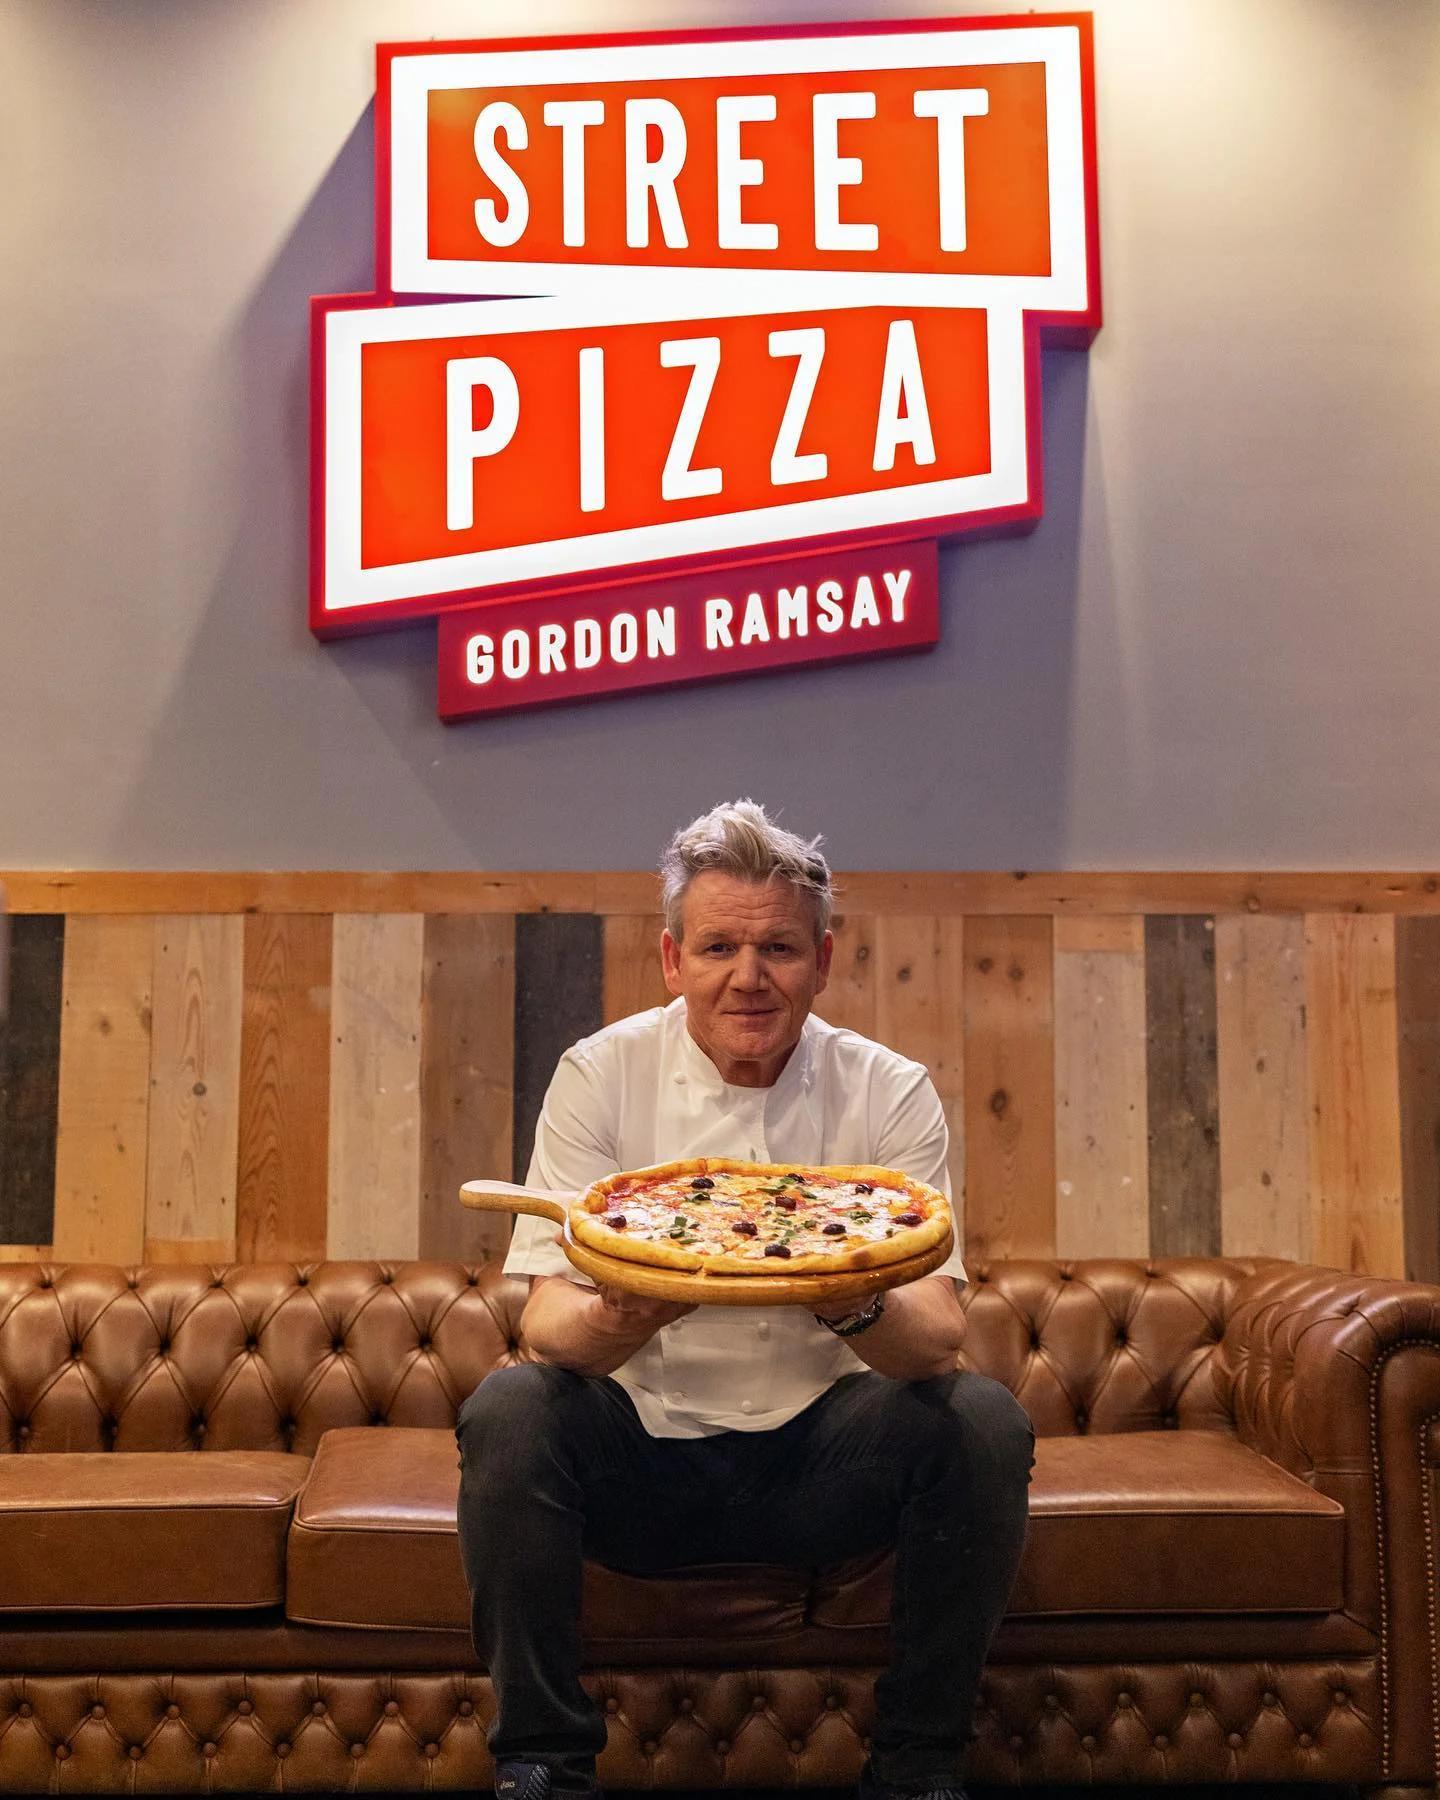 Gordon Ramsay's Street Pizza